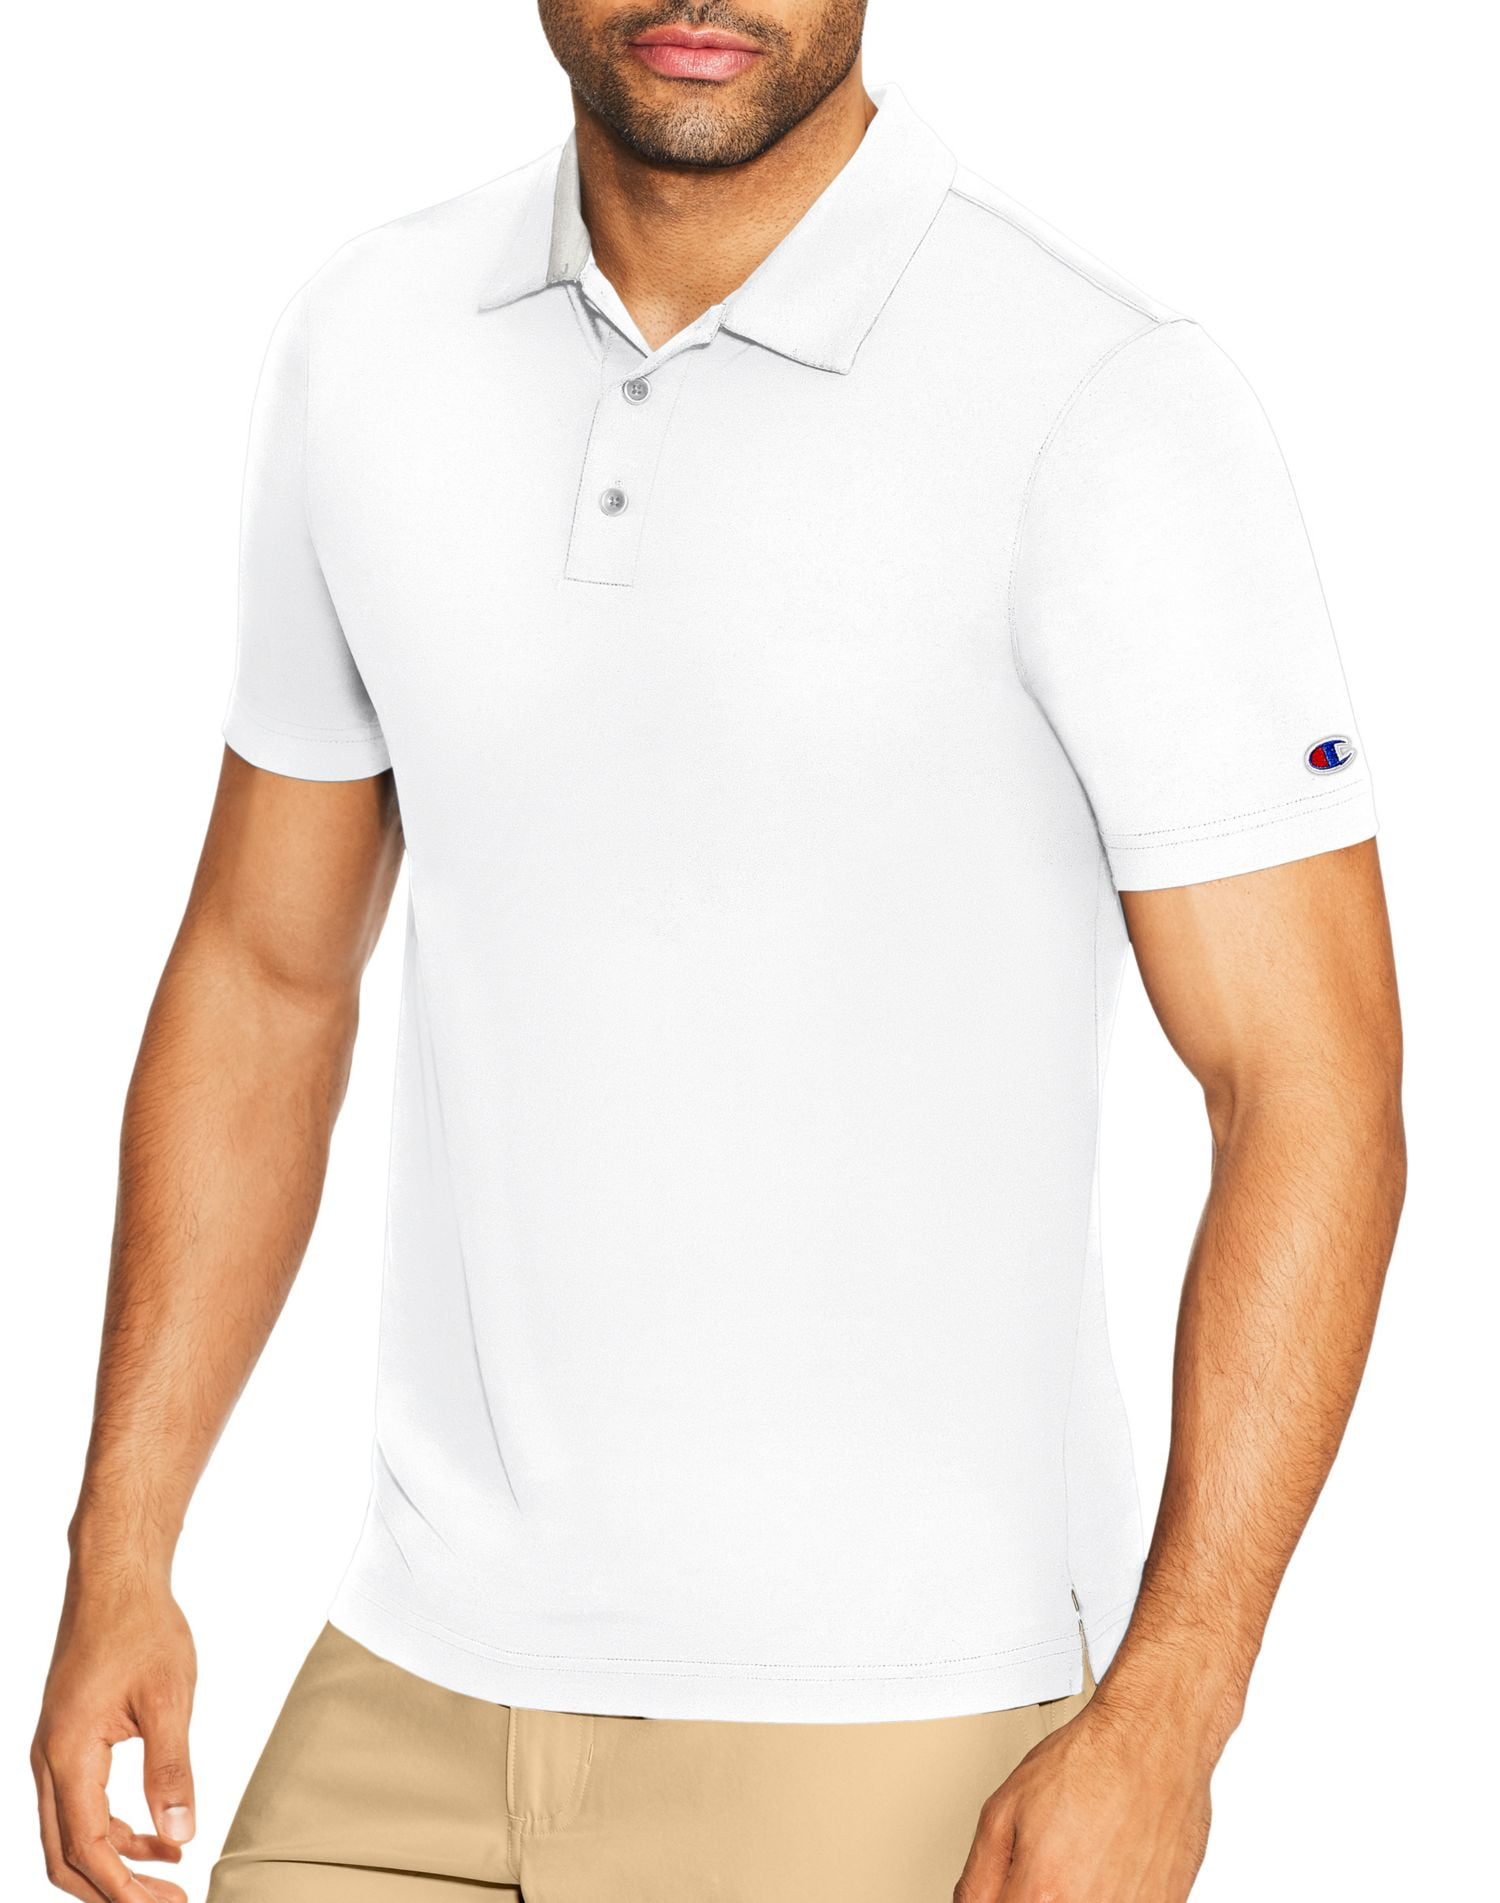 Mens Performance Golf Polo Shirt 